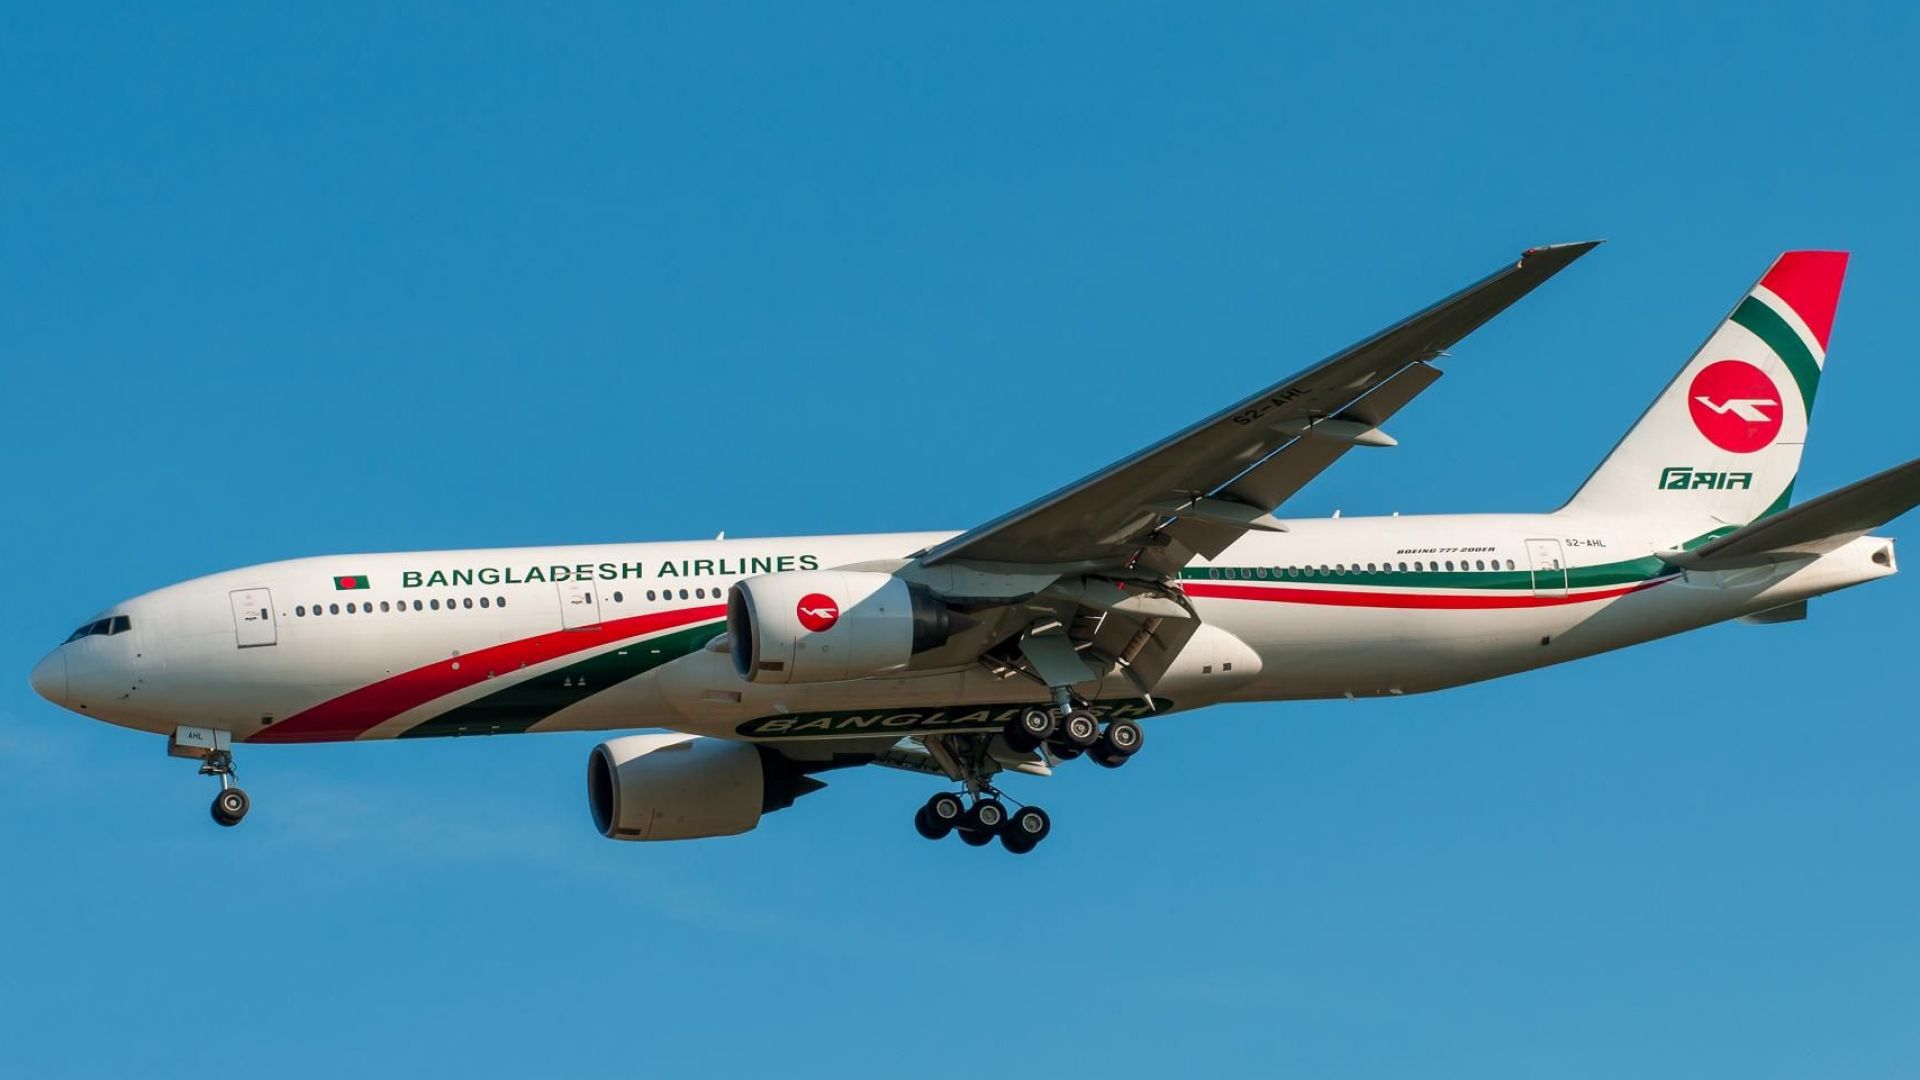 Самолет на бангладешките авиолинии Биман, изпълняващ полет от бангладешката столица